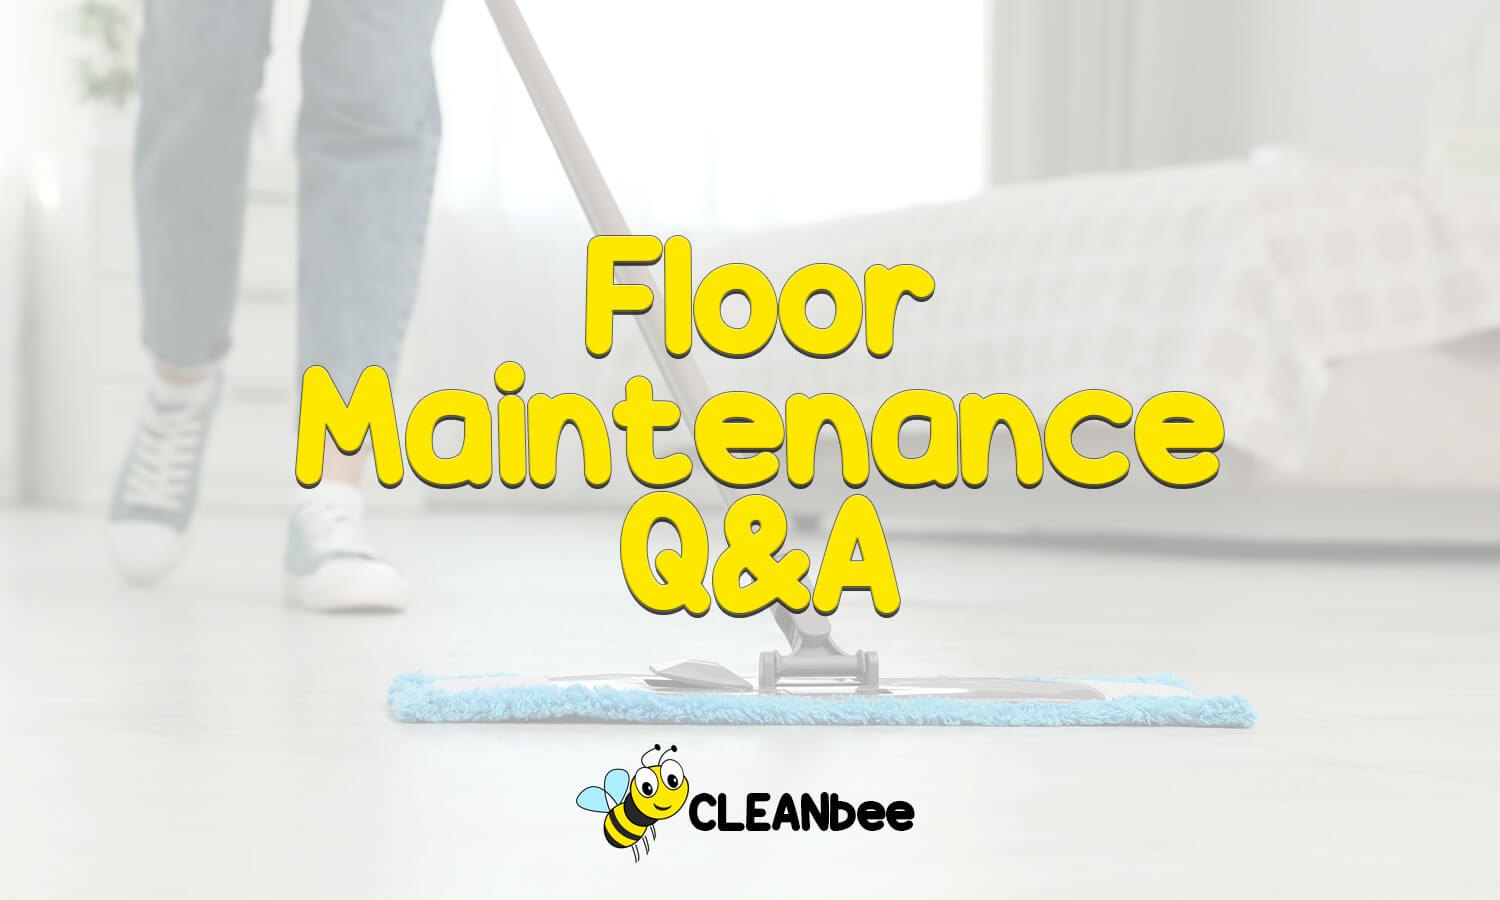 Floor Maintenance Q&A